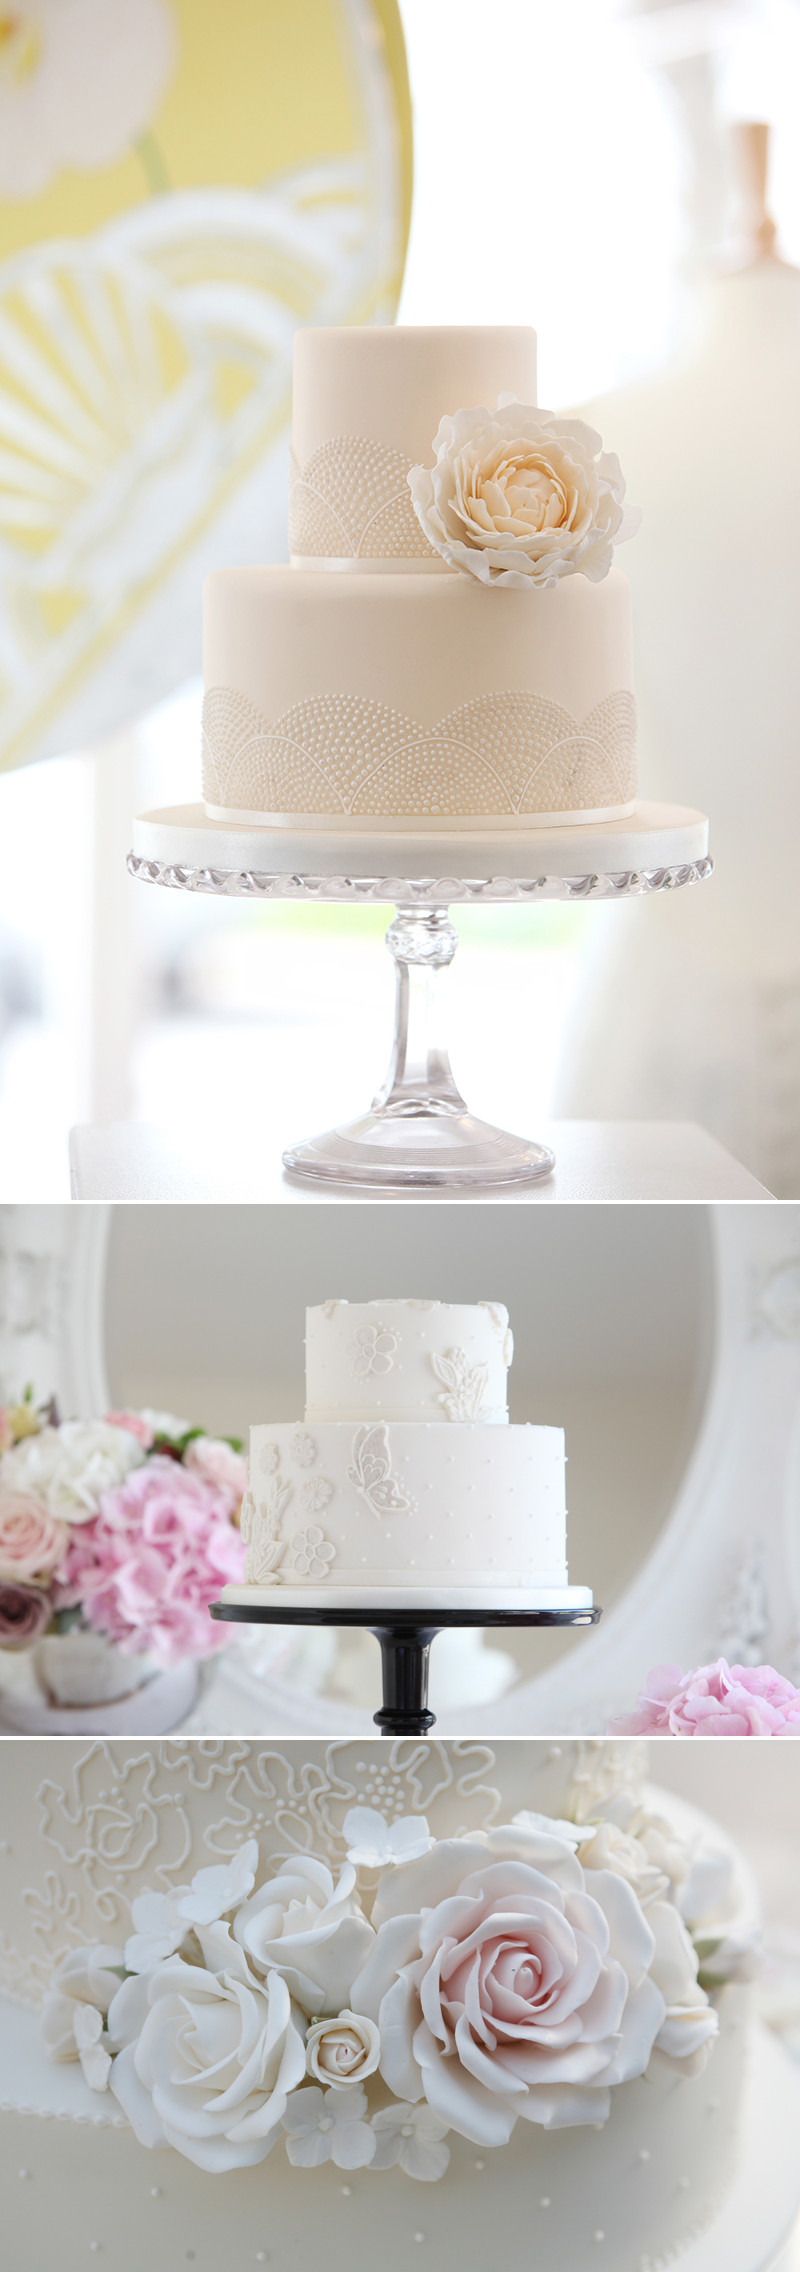 Wedding Cakes Inspiration
 Delicious Wedding Cake Inspiration for 2015